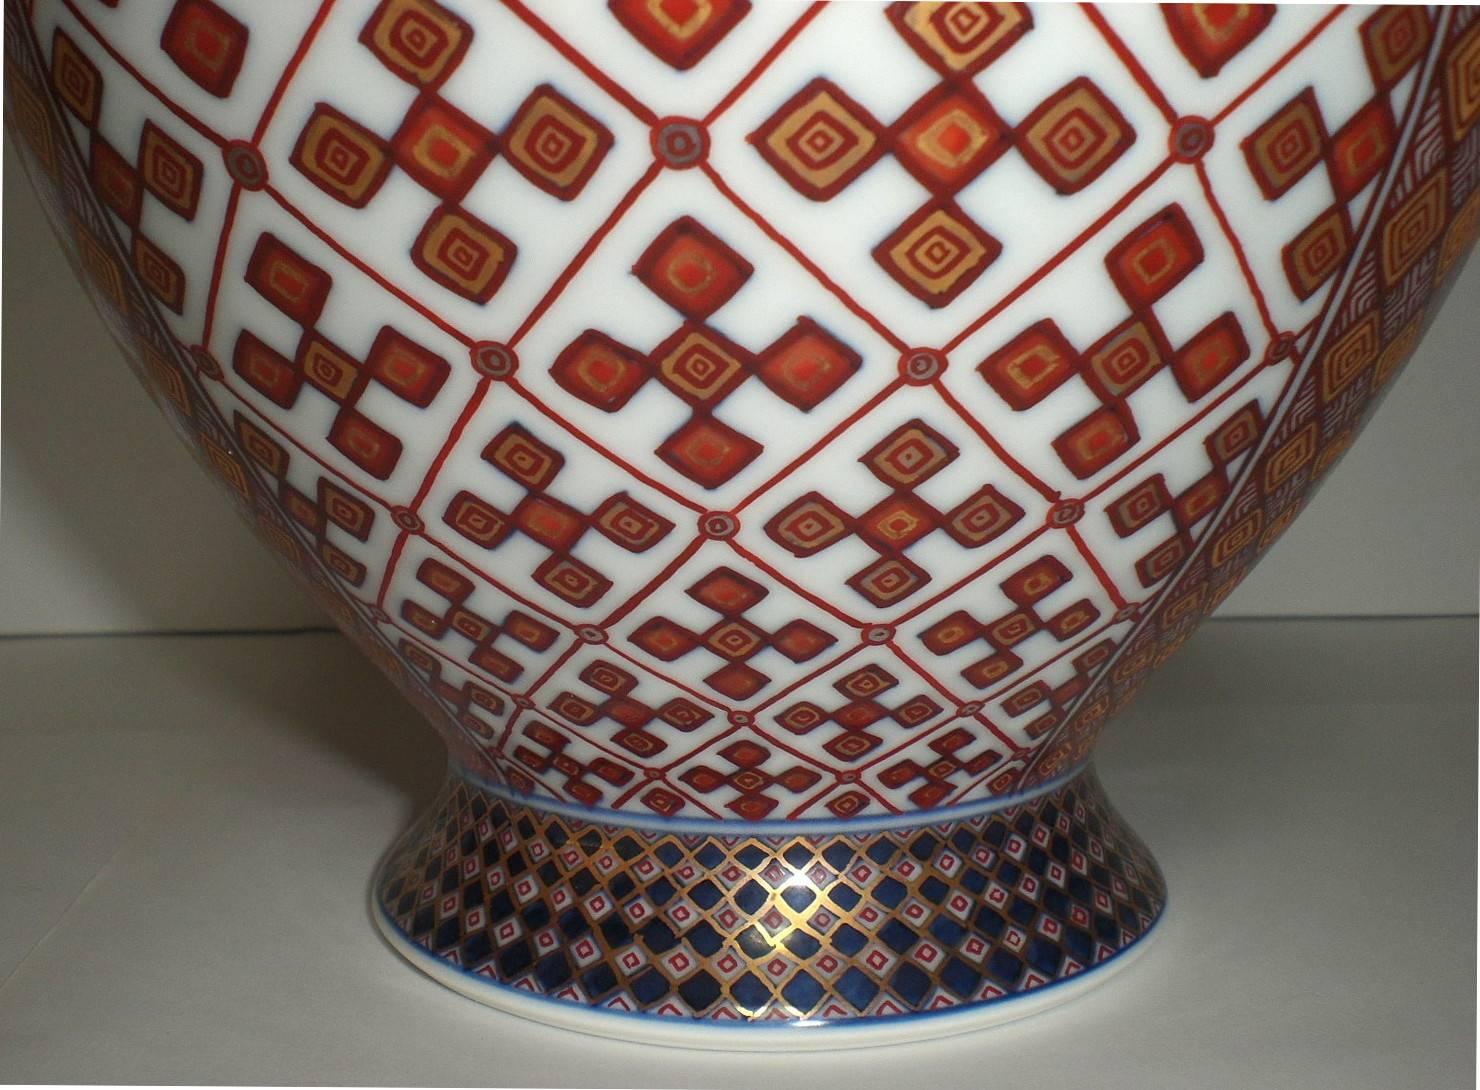 Gilt Japanese Contemporary Red Gold Blue White Porcelain Vase by Master Artist